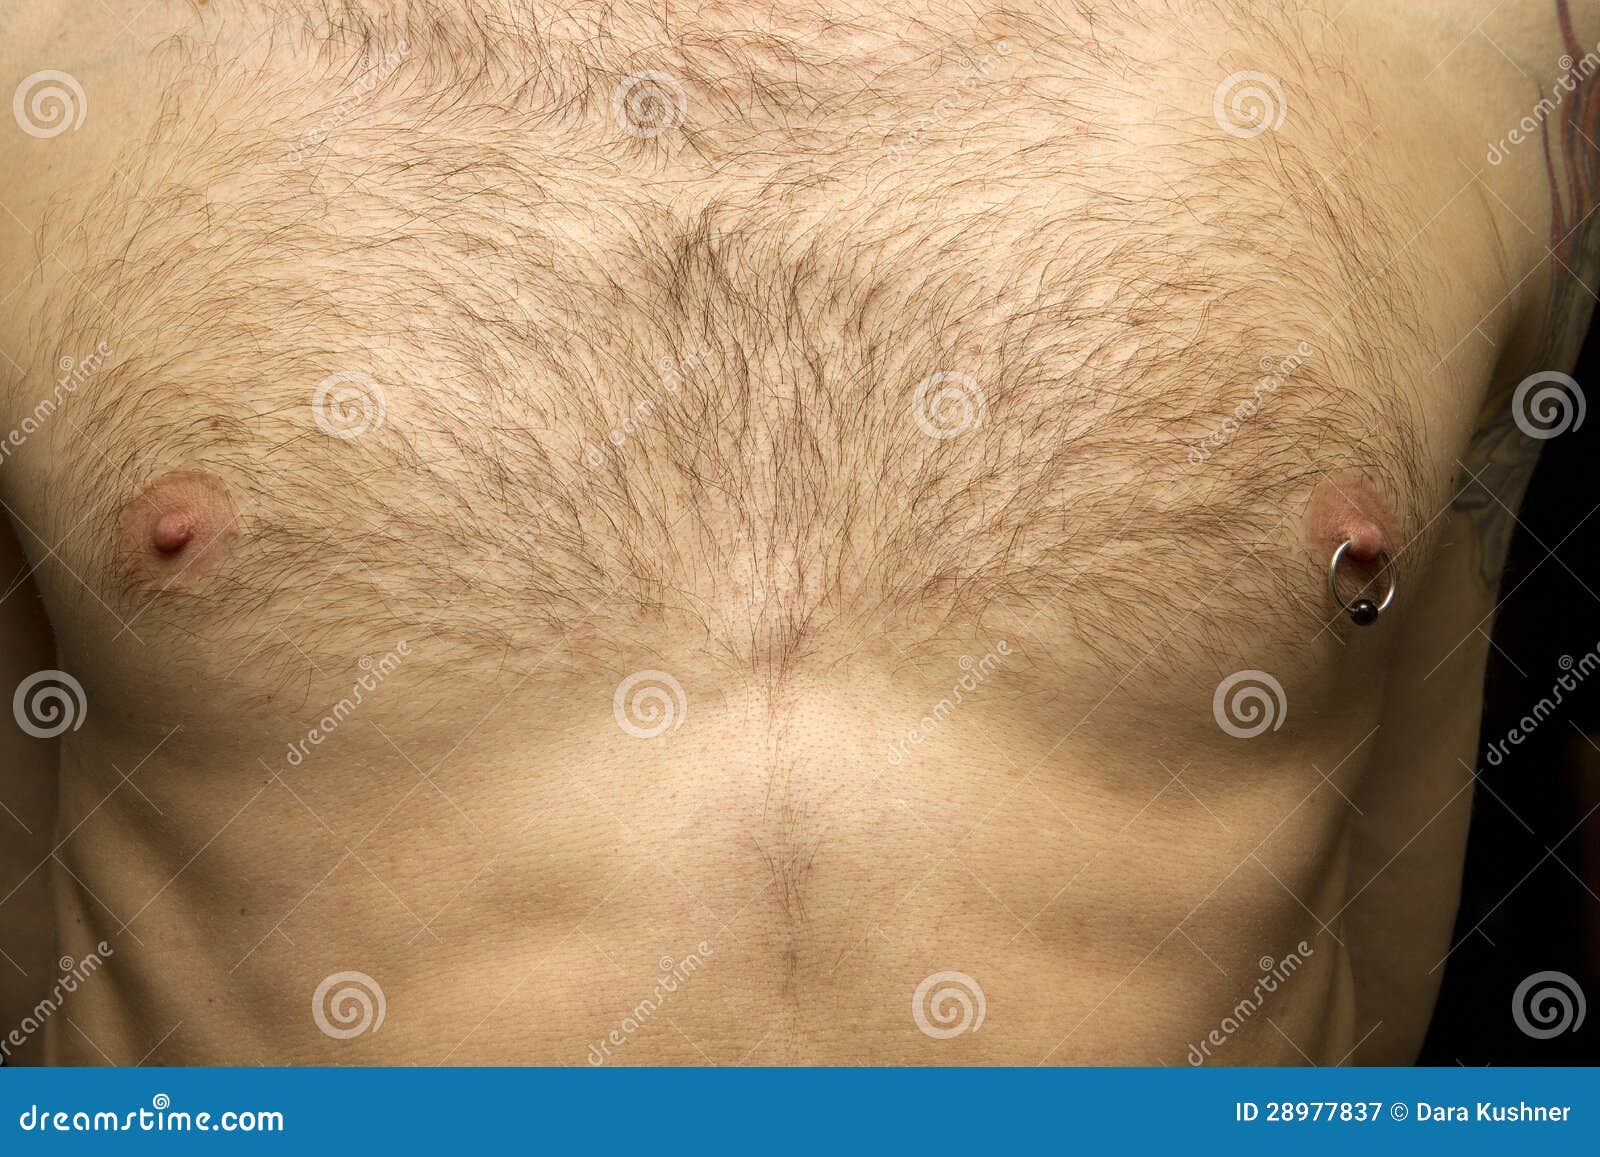 шишка в груди у мужчин фото 90